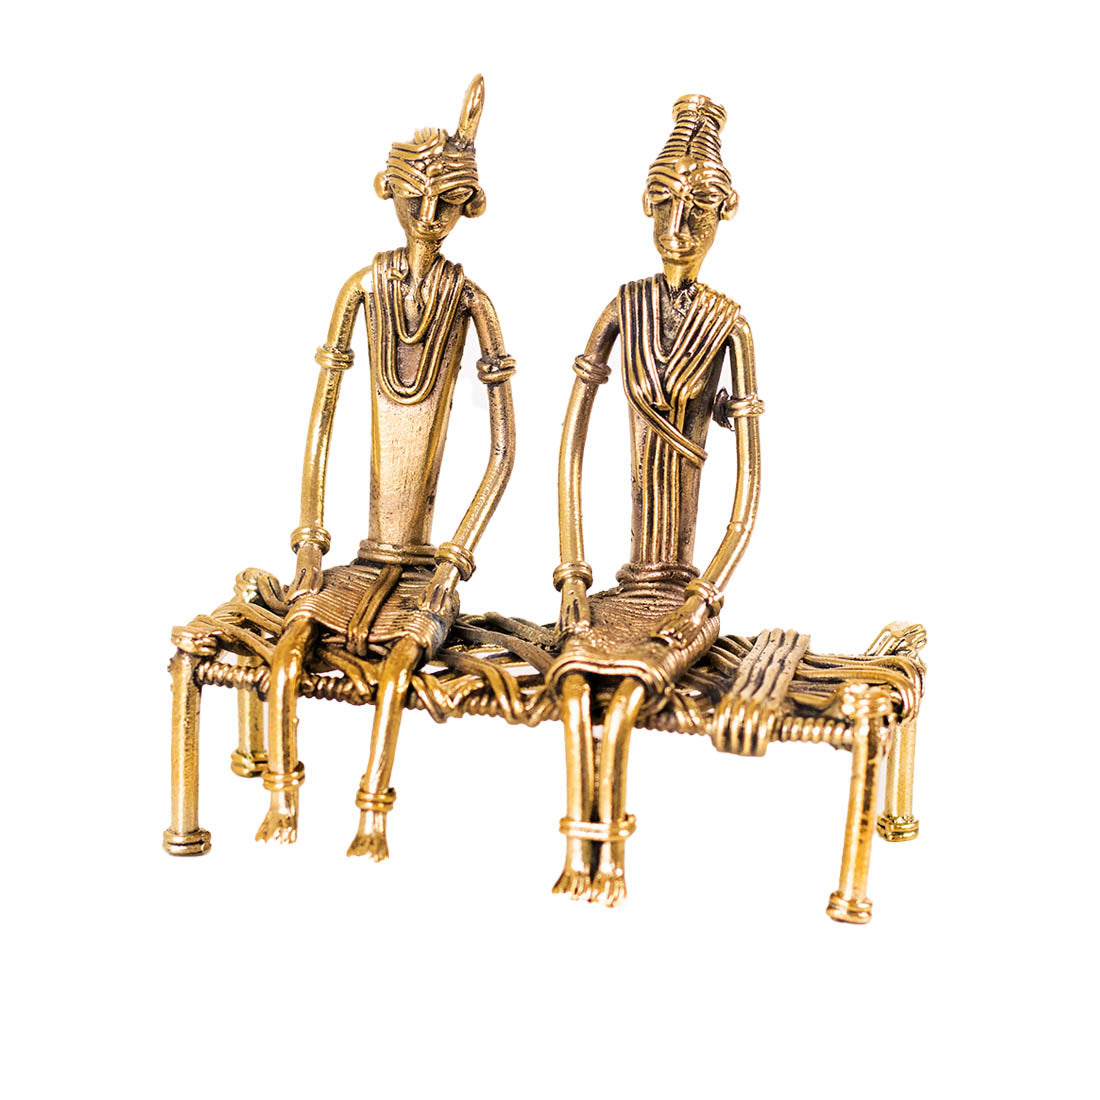  Antique Brass Figures in Dhokra art